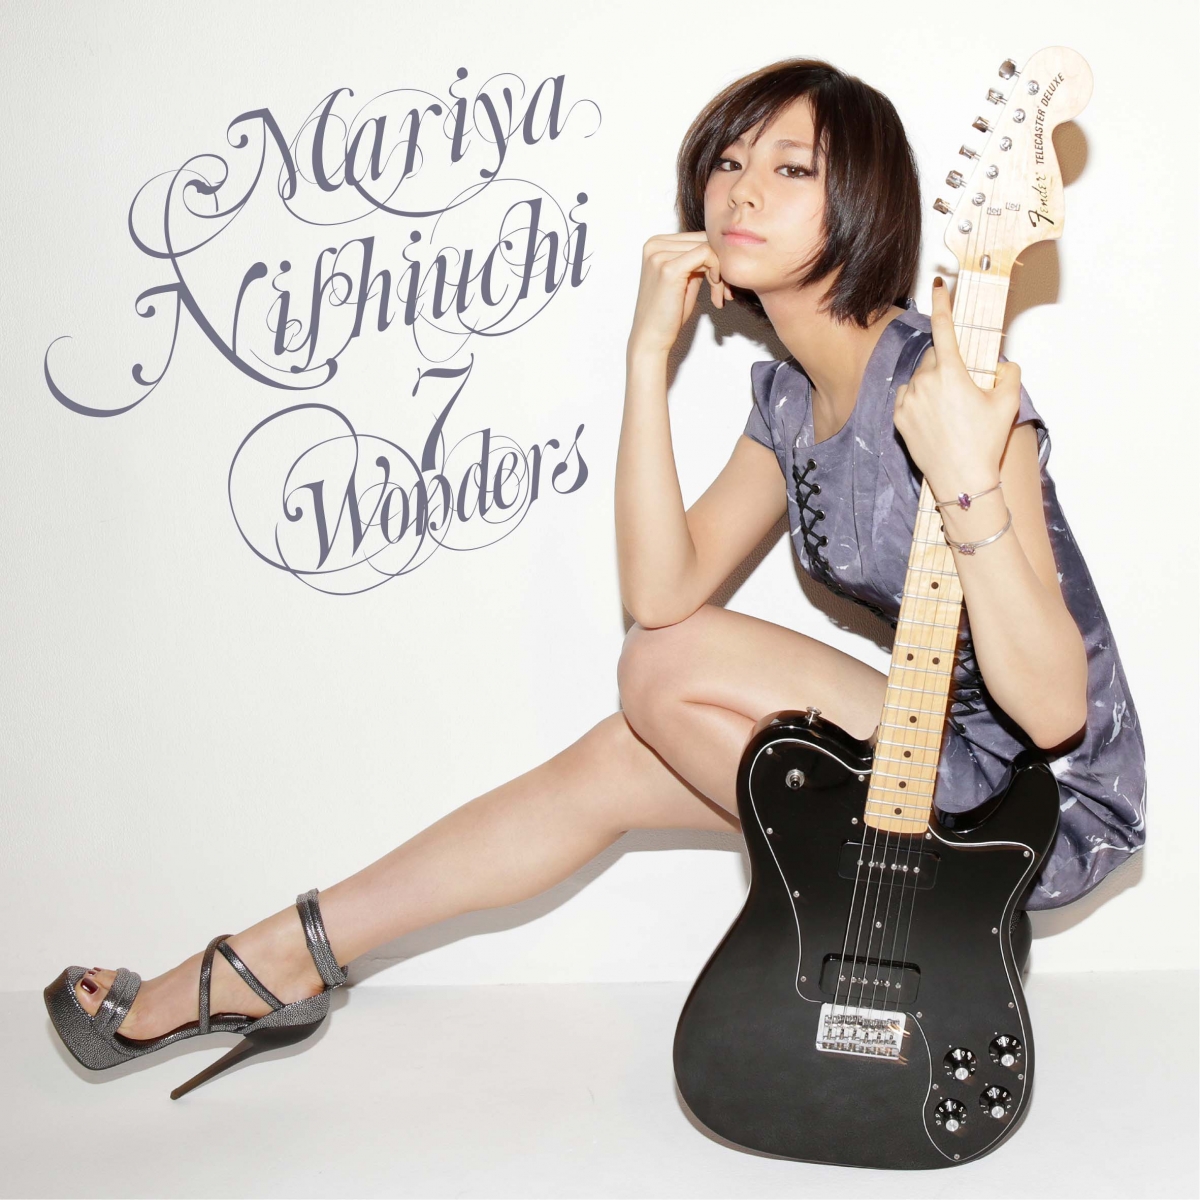 Mariya Nishiuchi Unveils Artwork and Contents of Her Second Single “7 WONDERS”